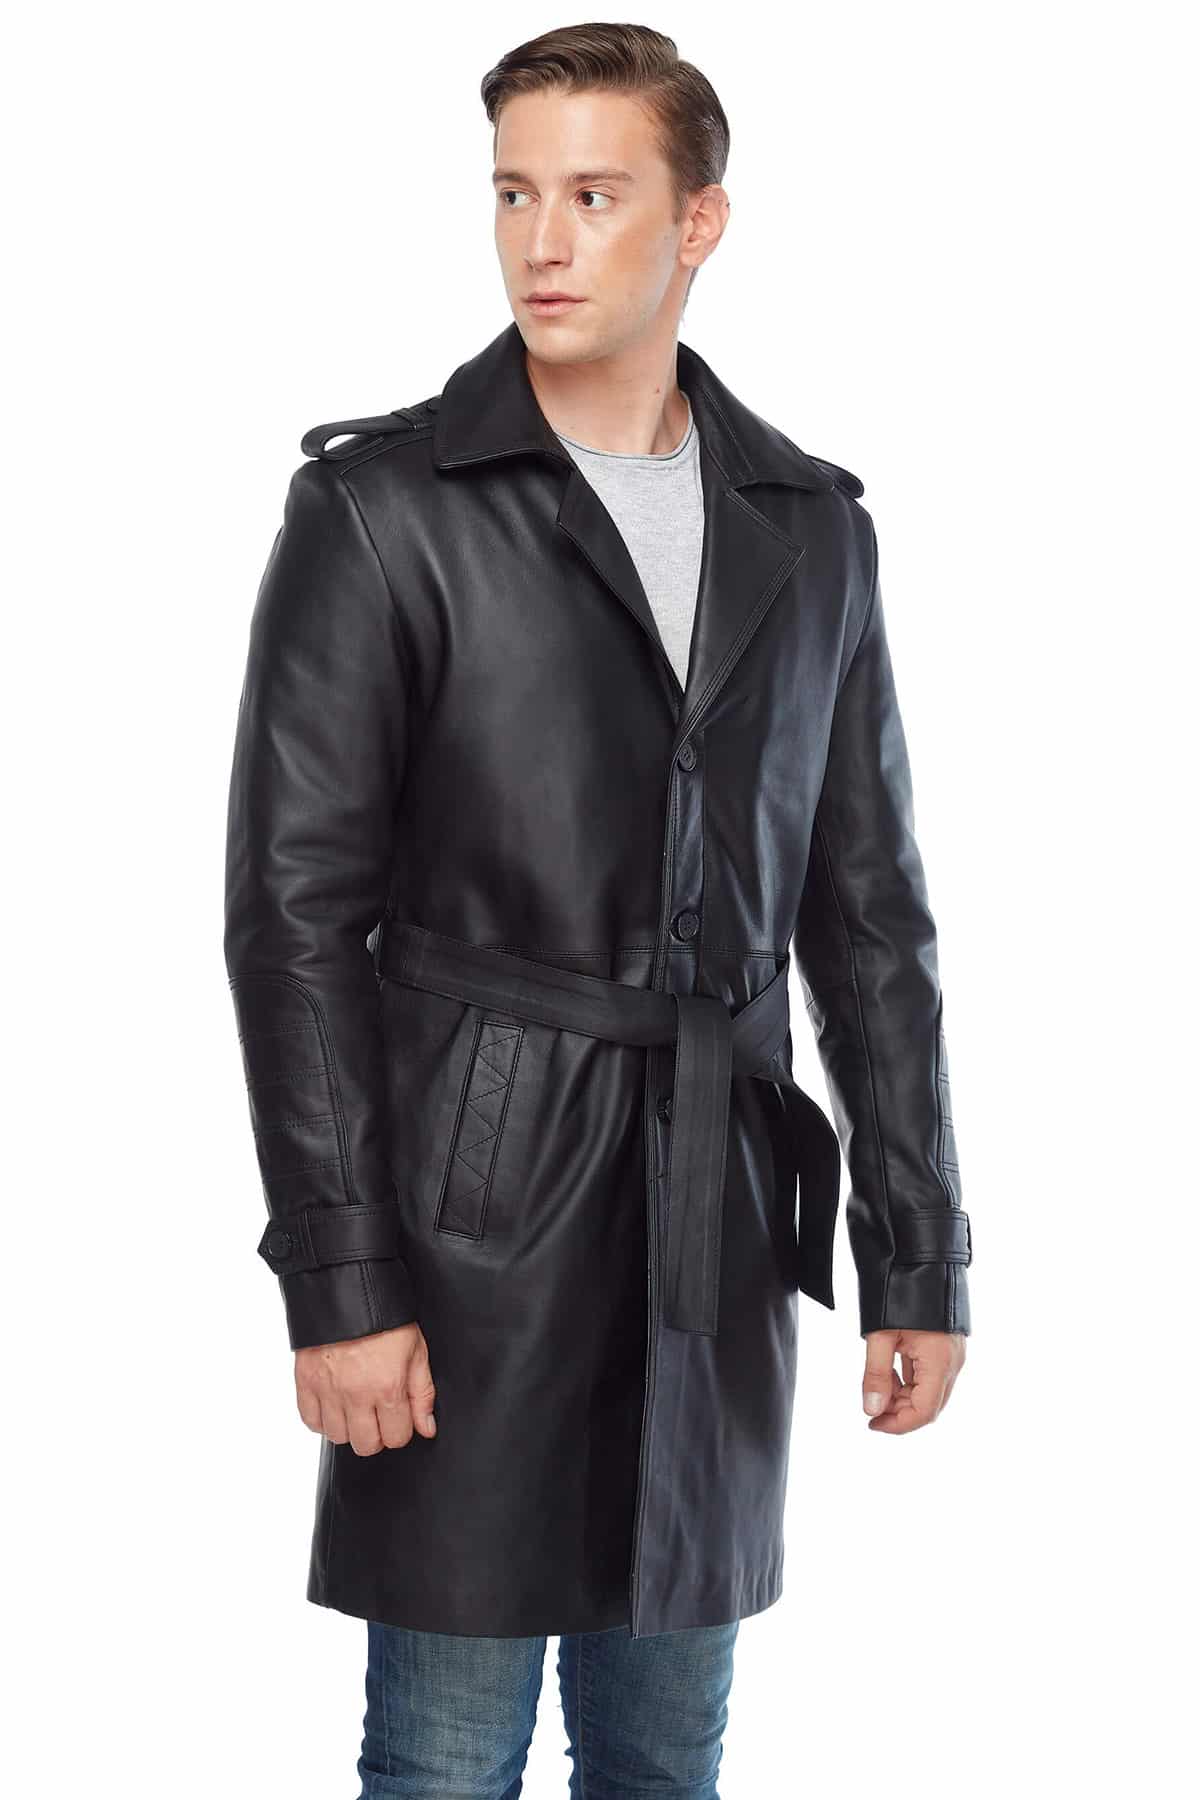 Daniel Men's 100 % Real Black Leather Topcoat